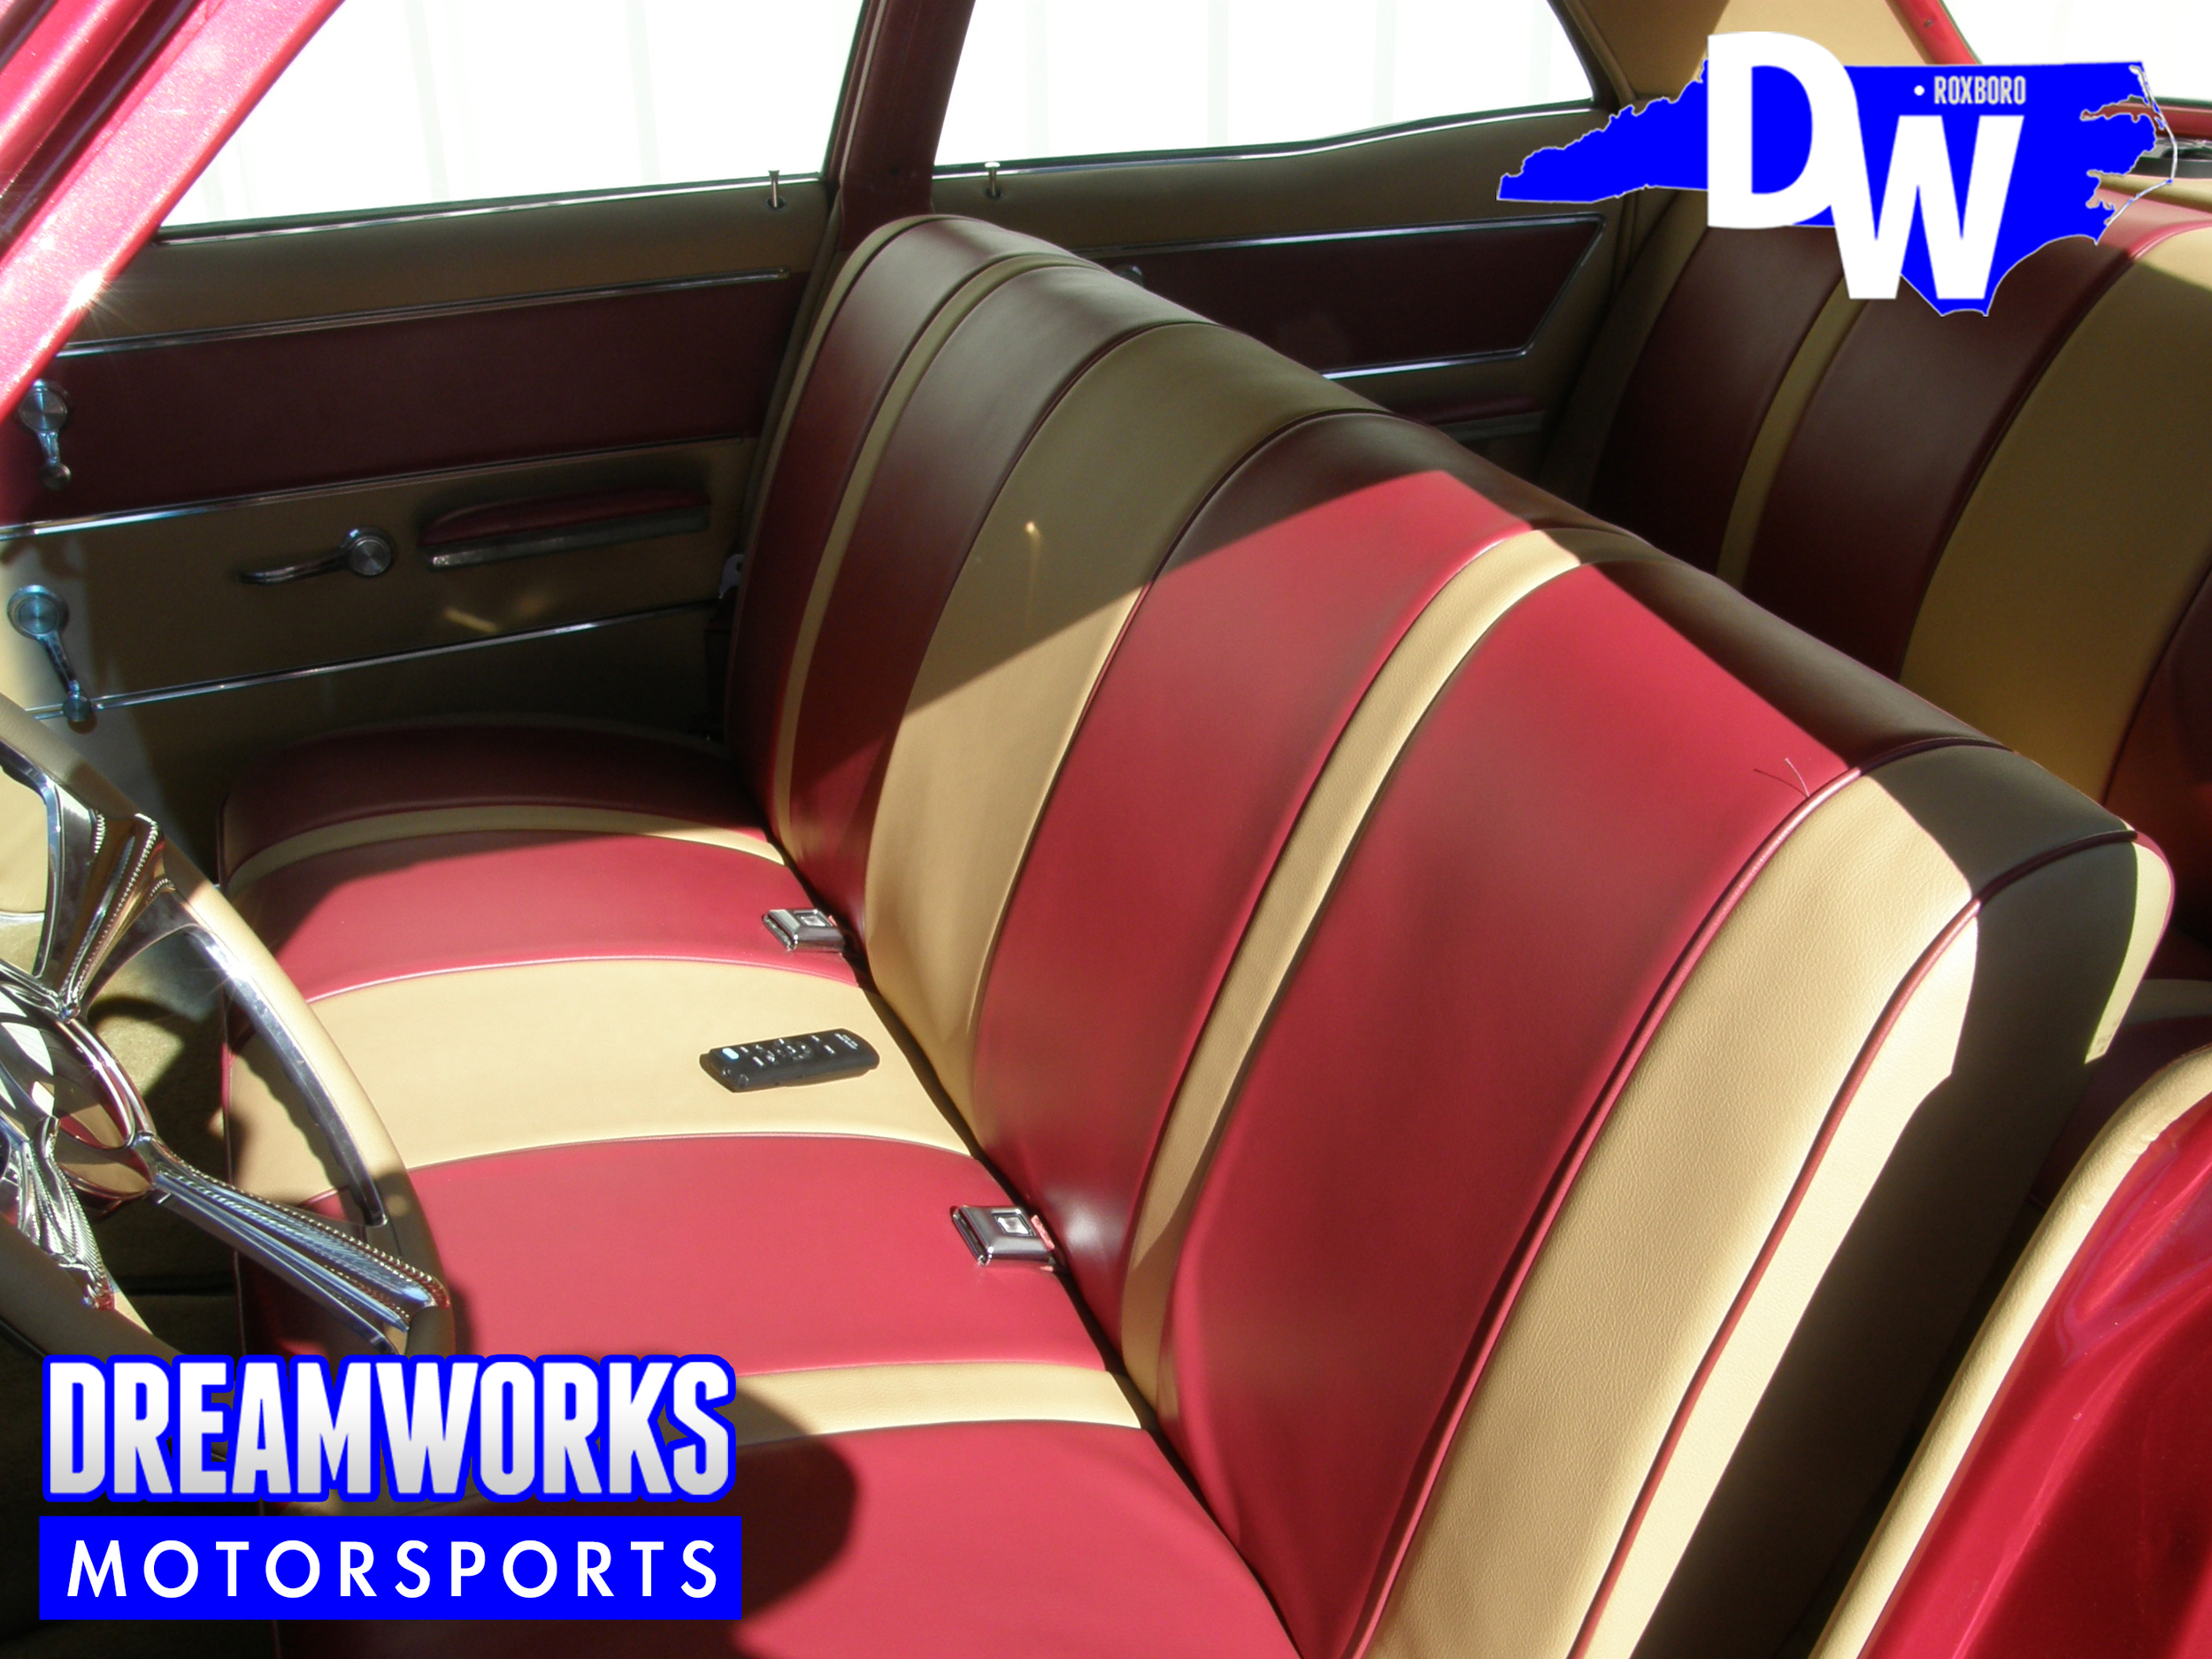 66-Buick-LeSabre-Dreamworks-Motorsports-7.jpg